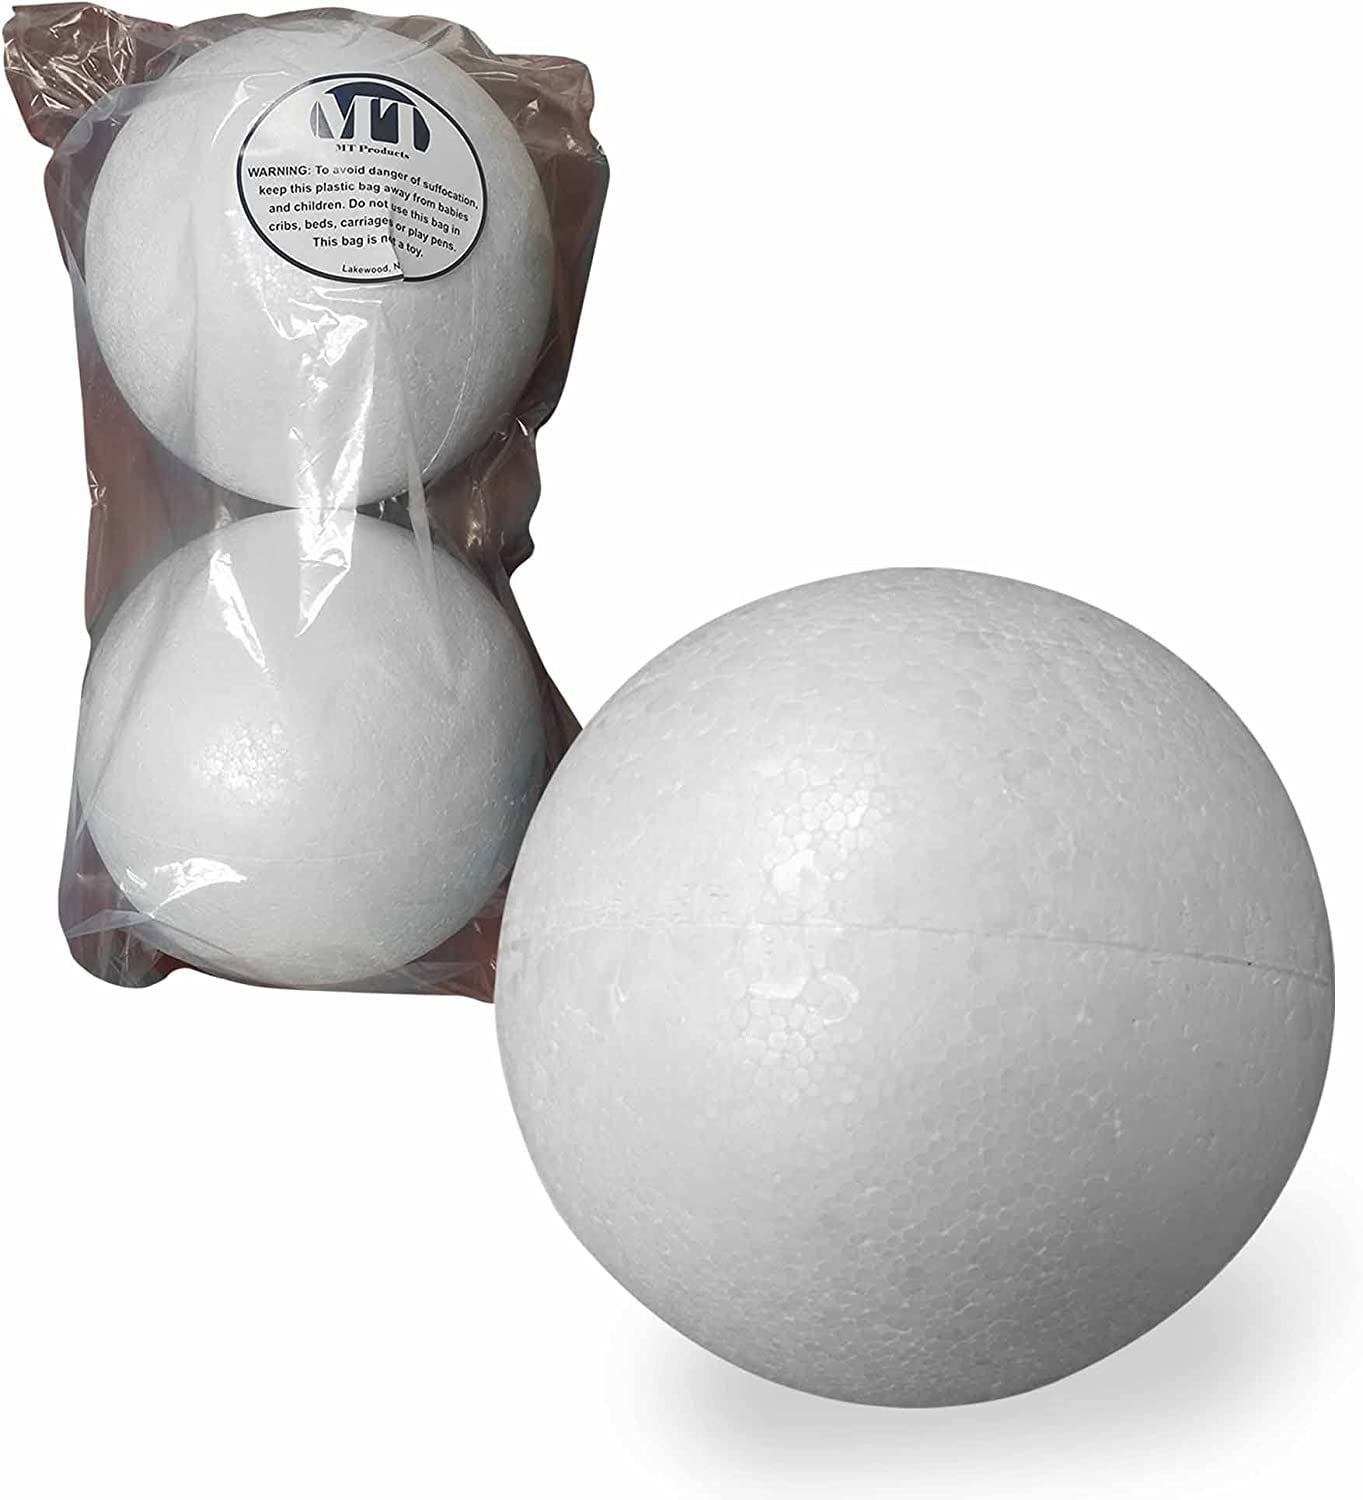 Ball - 7 - Styrofoam – The Craft Place USA